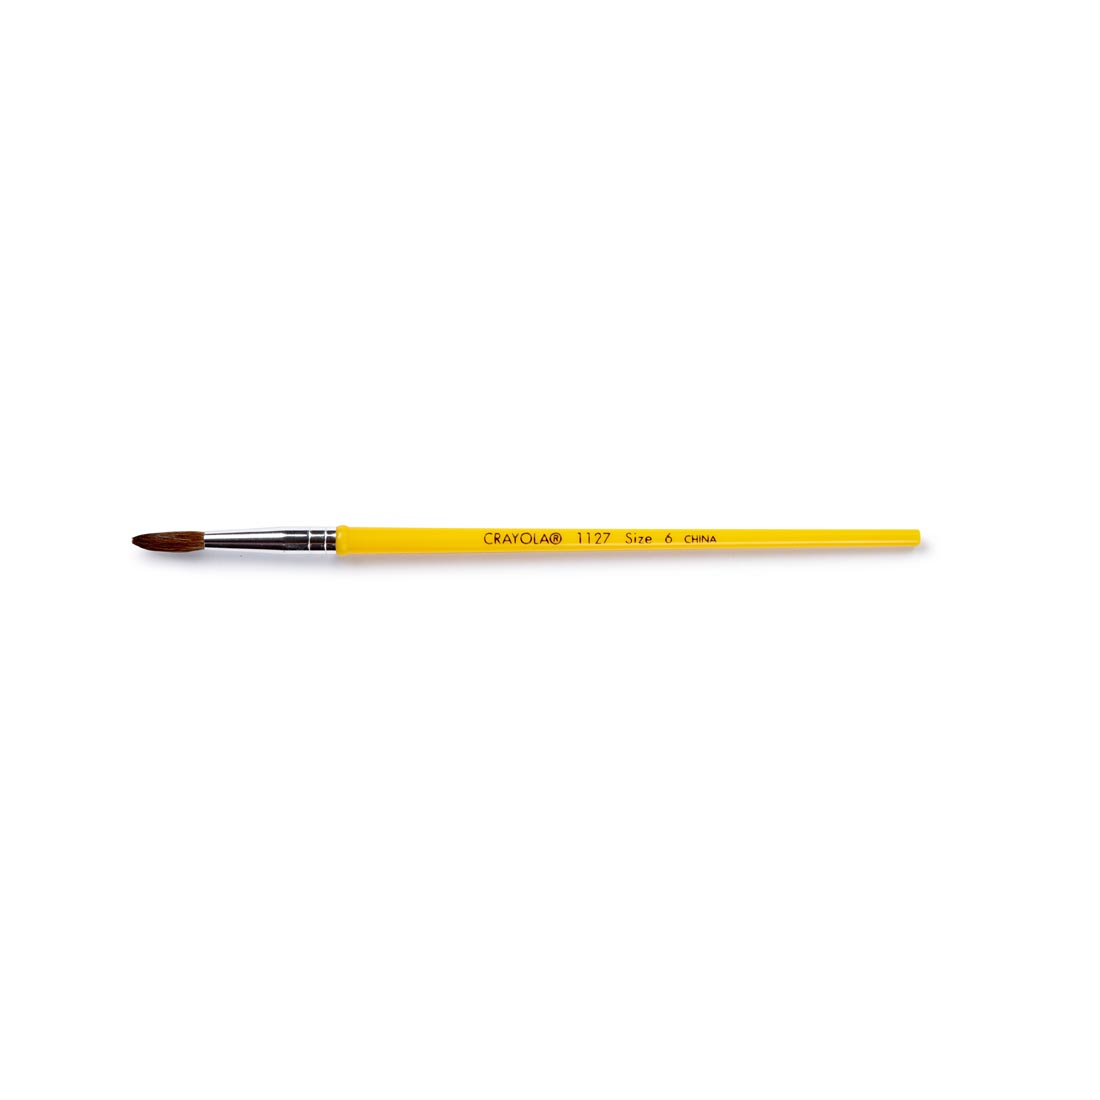 Crayola Round Watercolor Brush Size 6